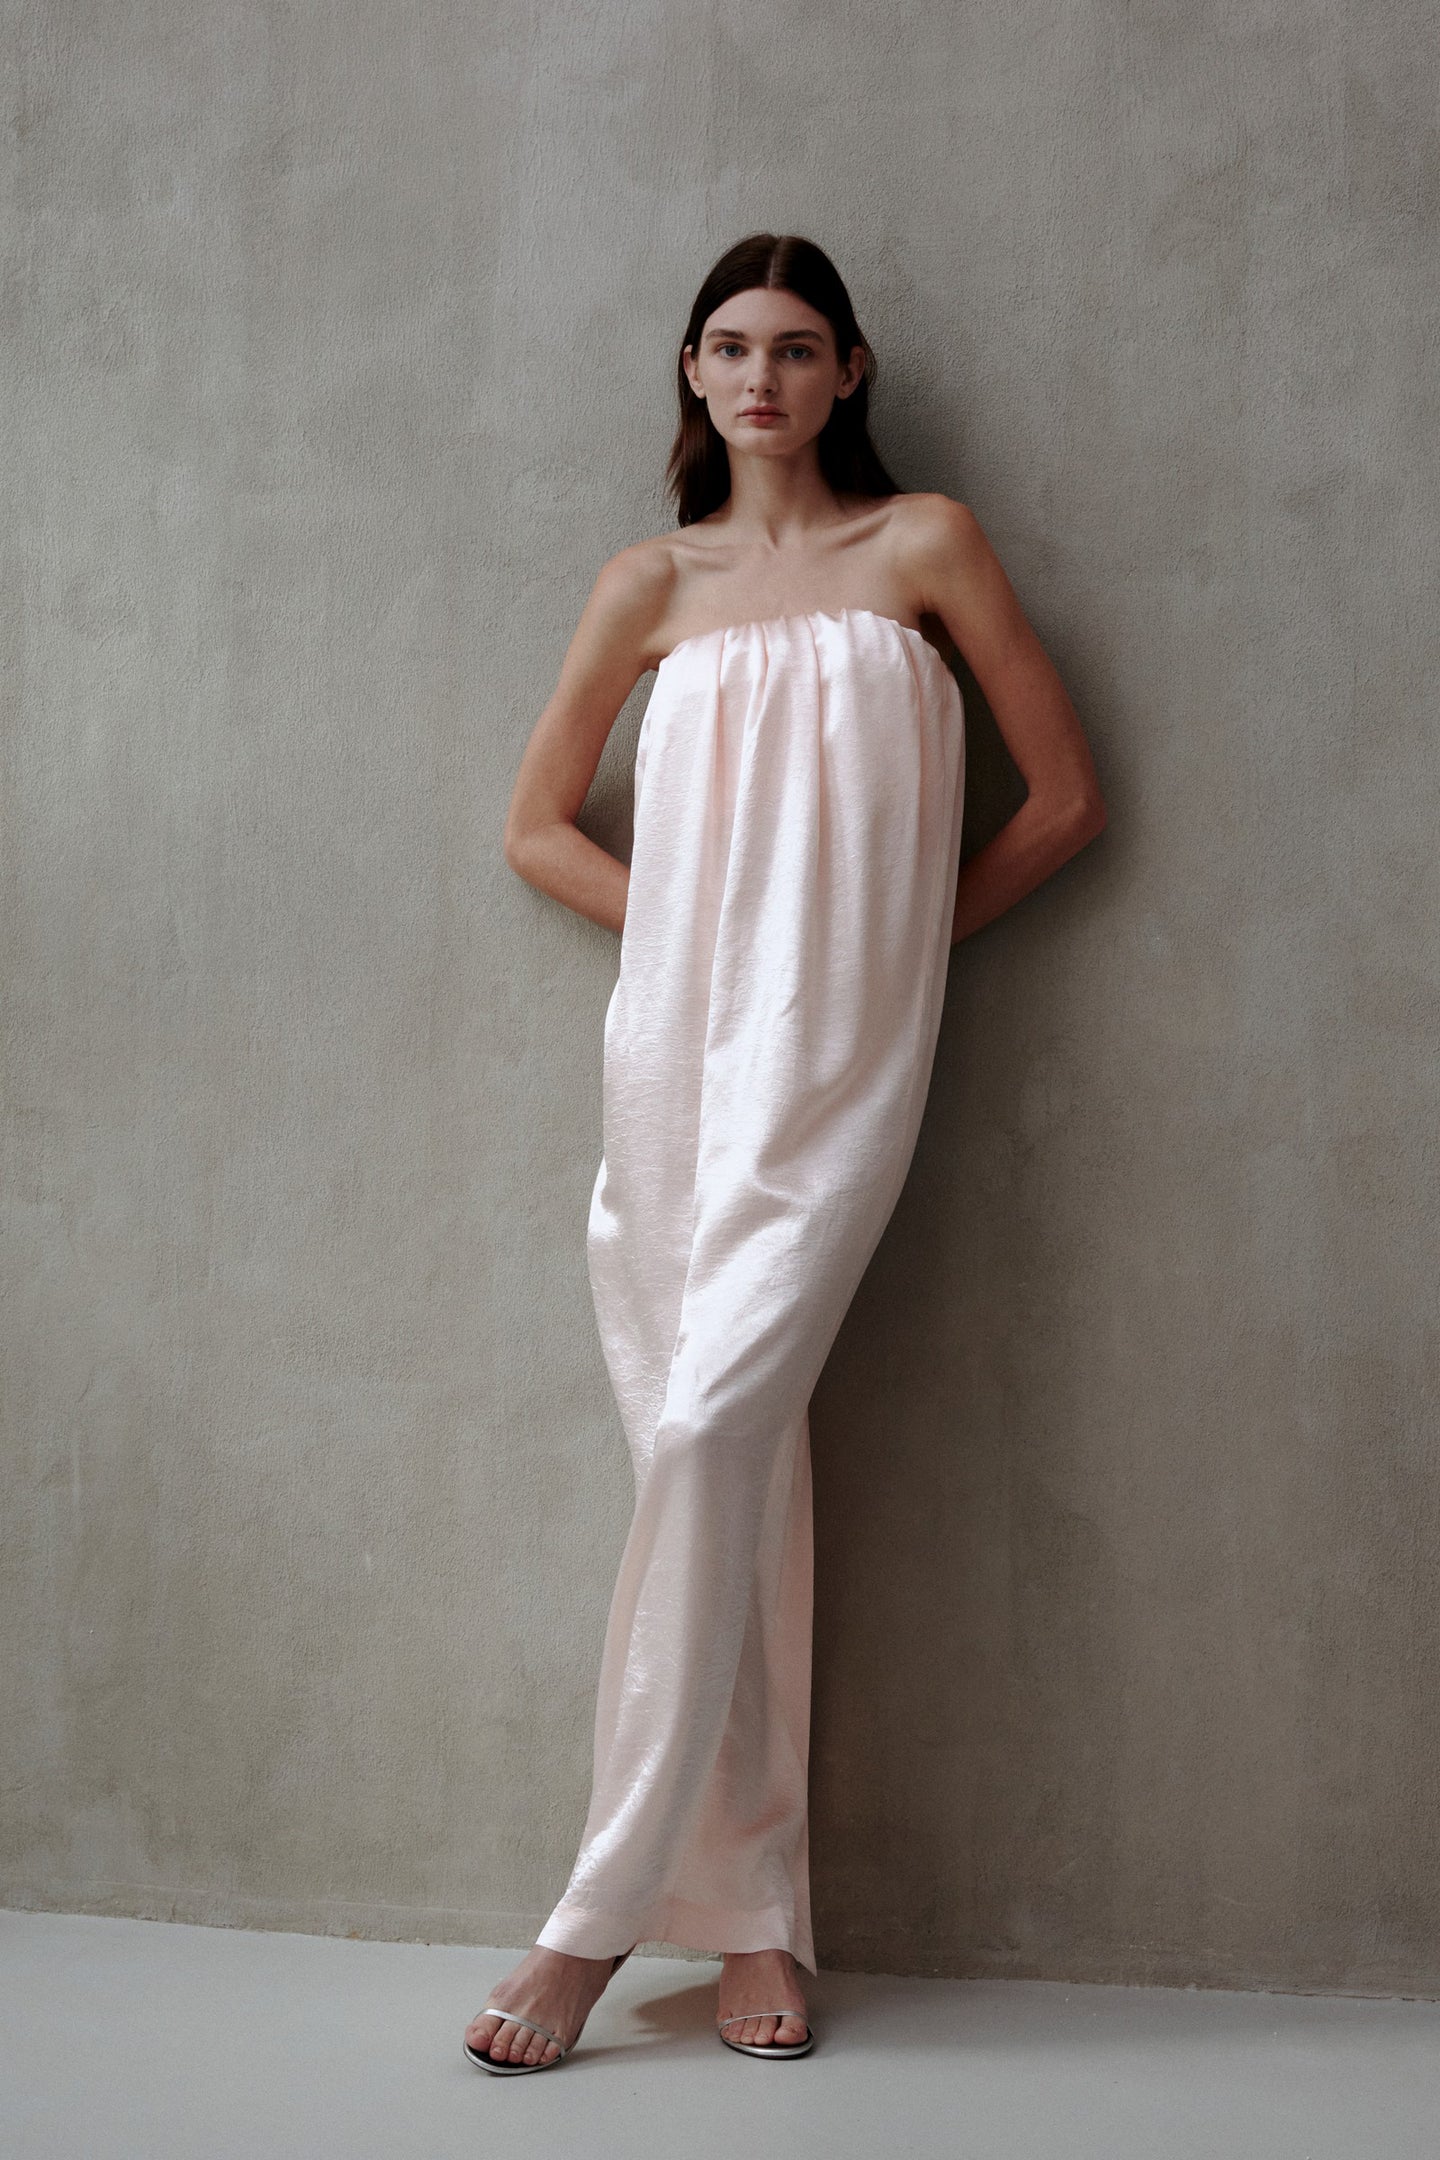 Model in pink Tiana dress